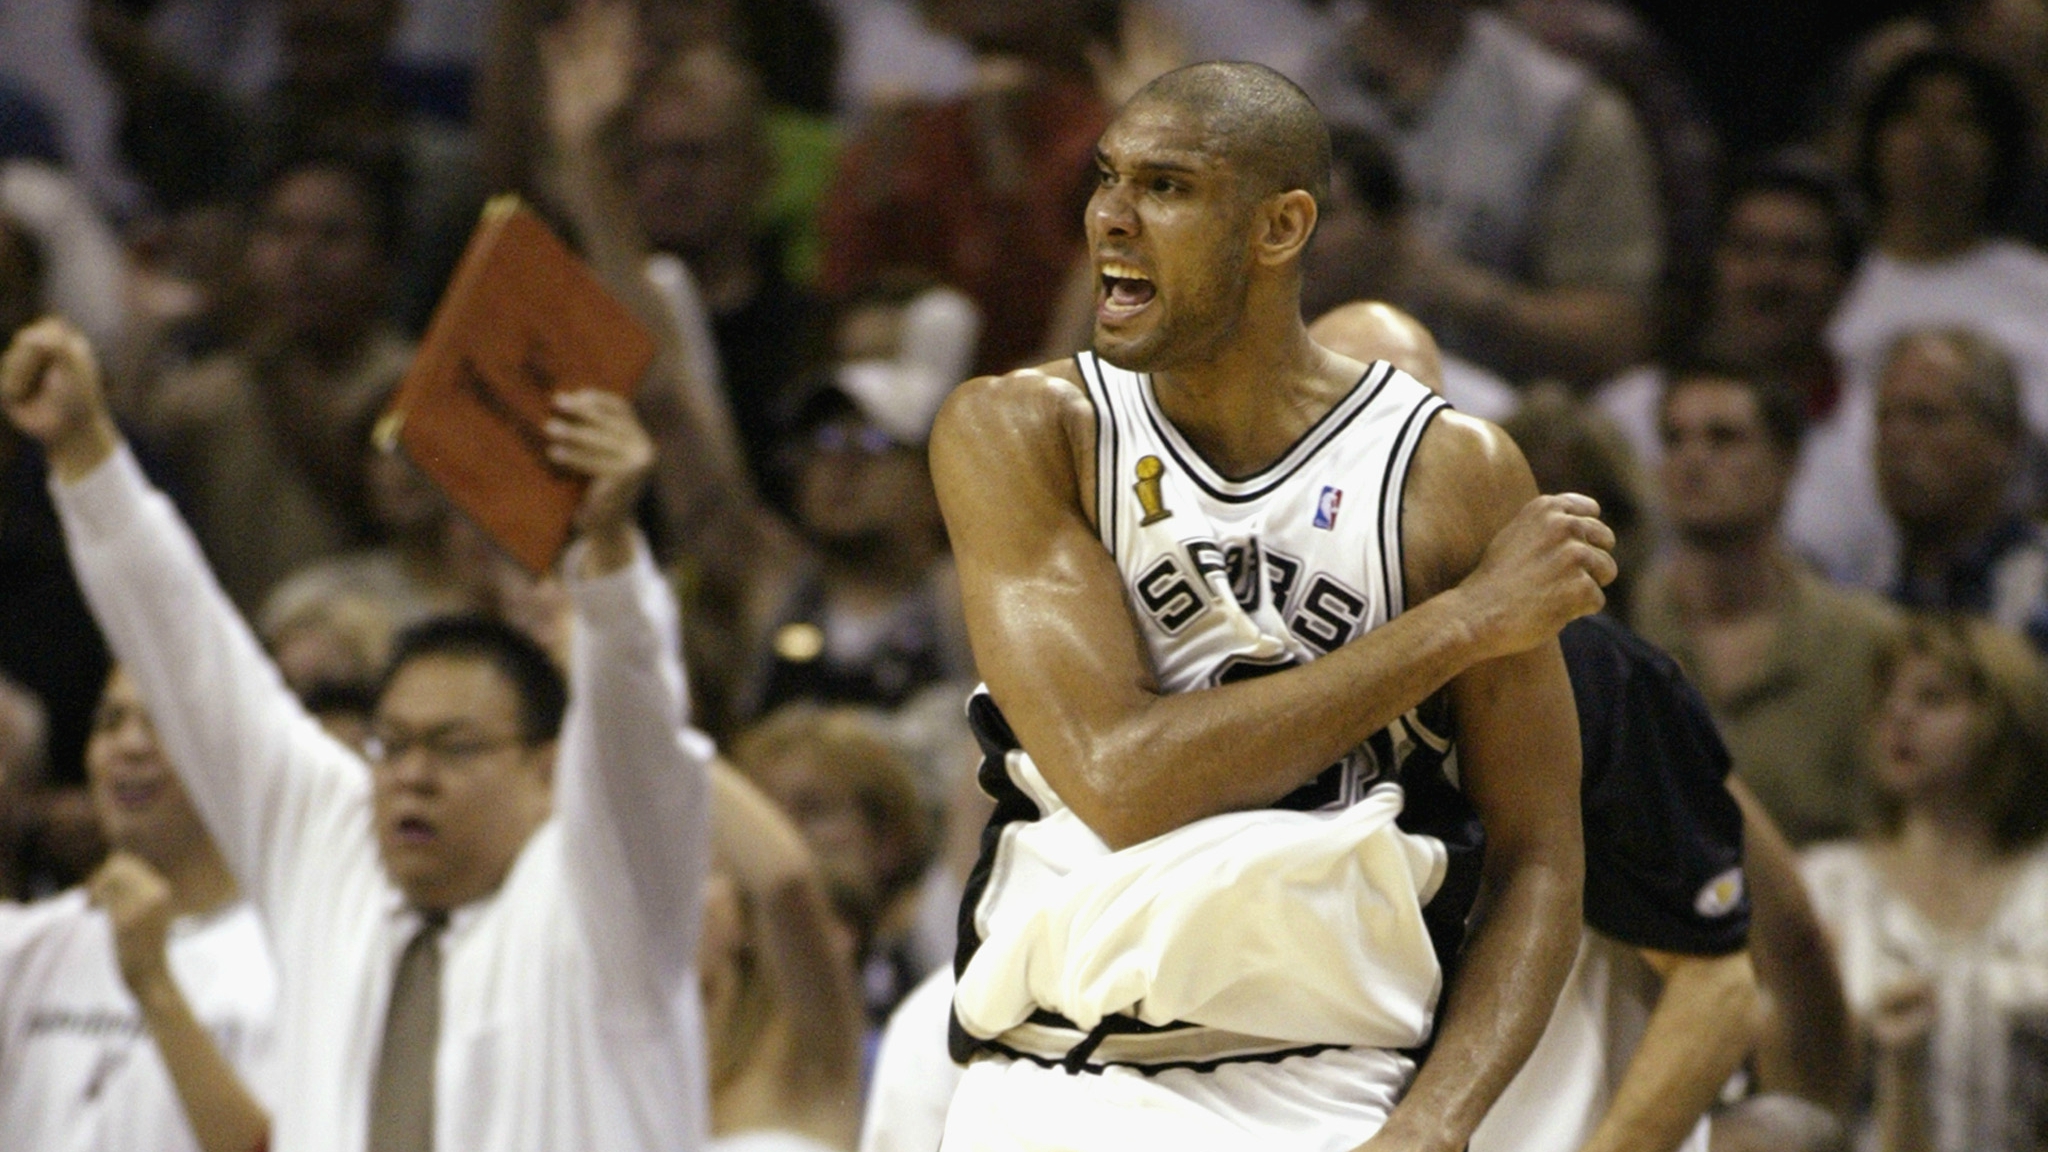 Verify: Did Tim Duncan score a quadruple-double in the 2003 NBA Finals?